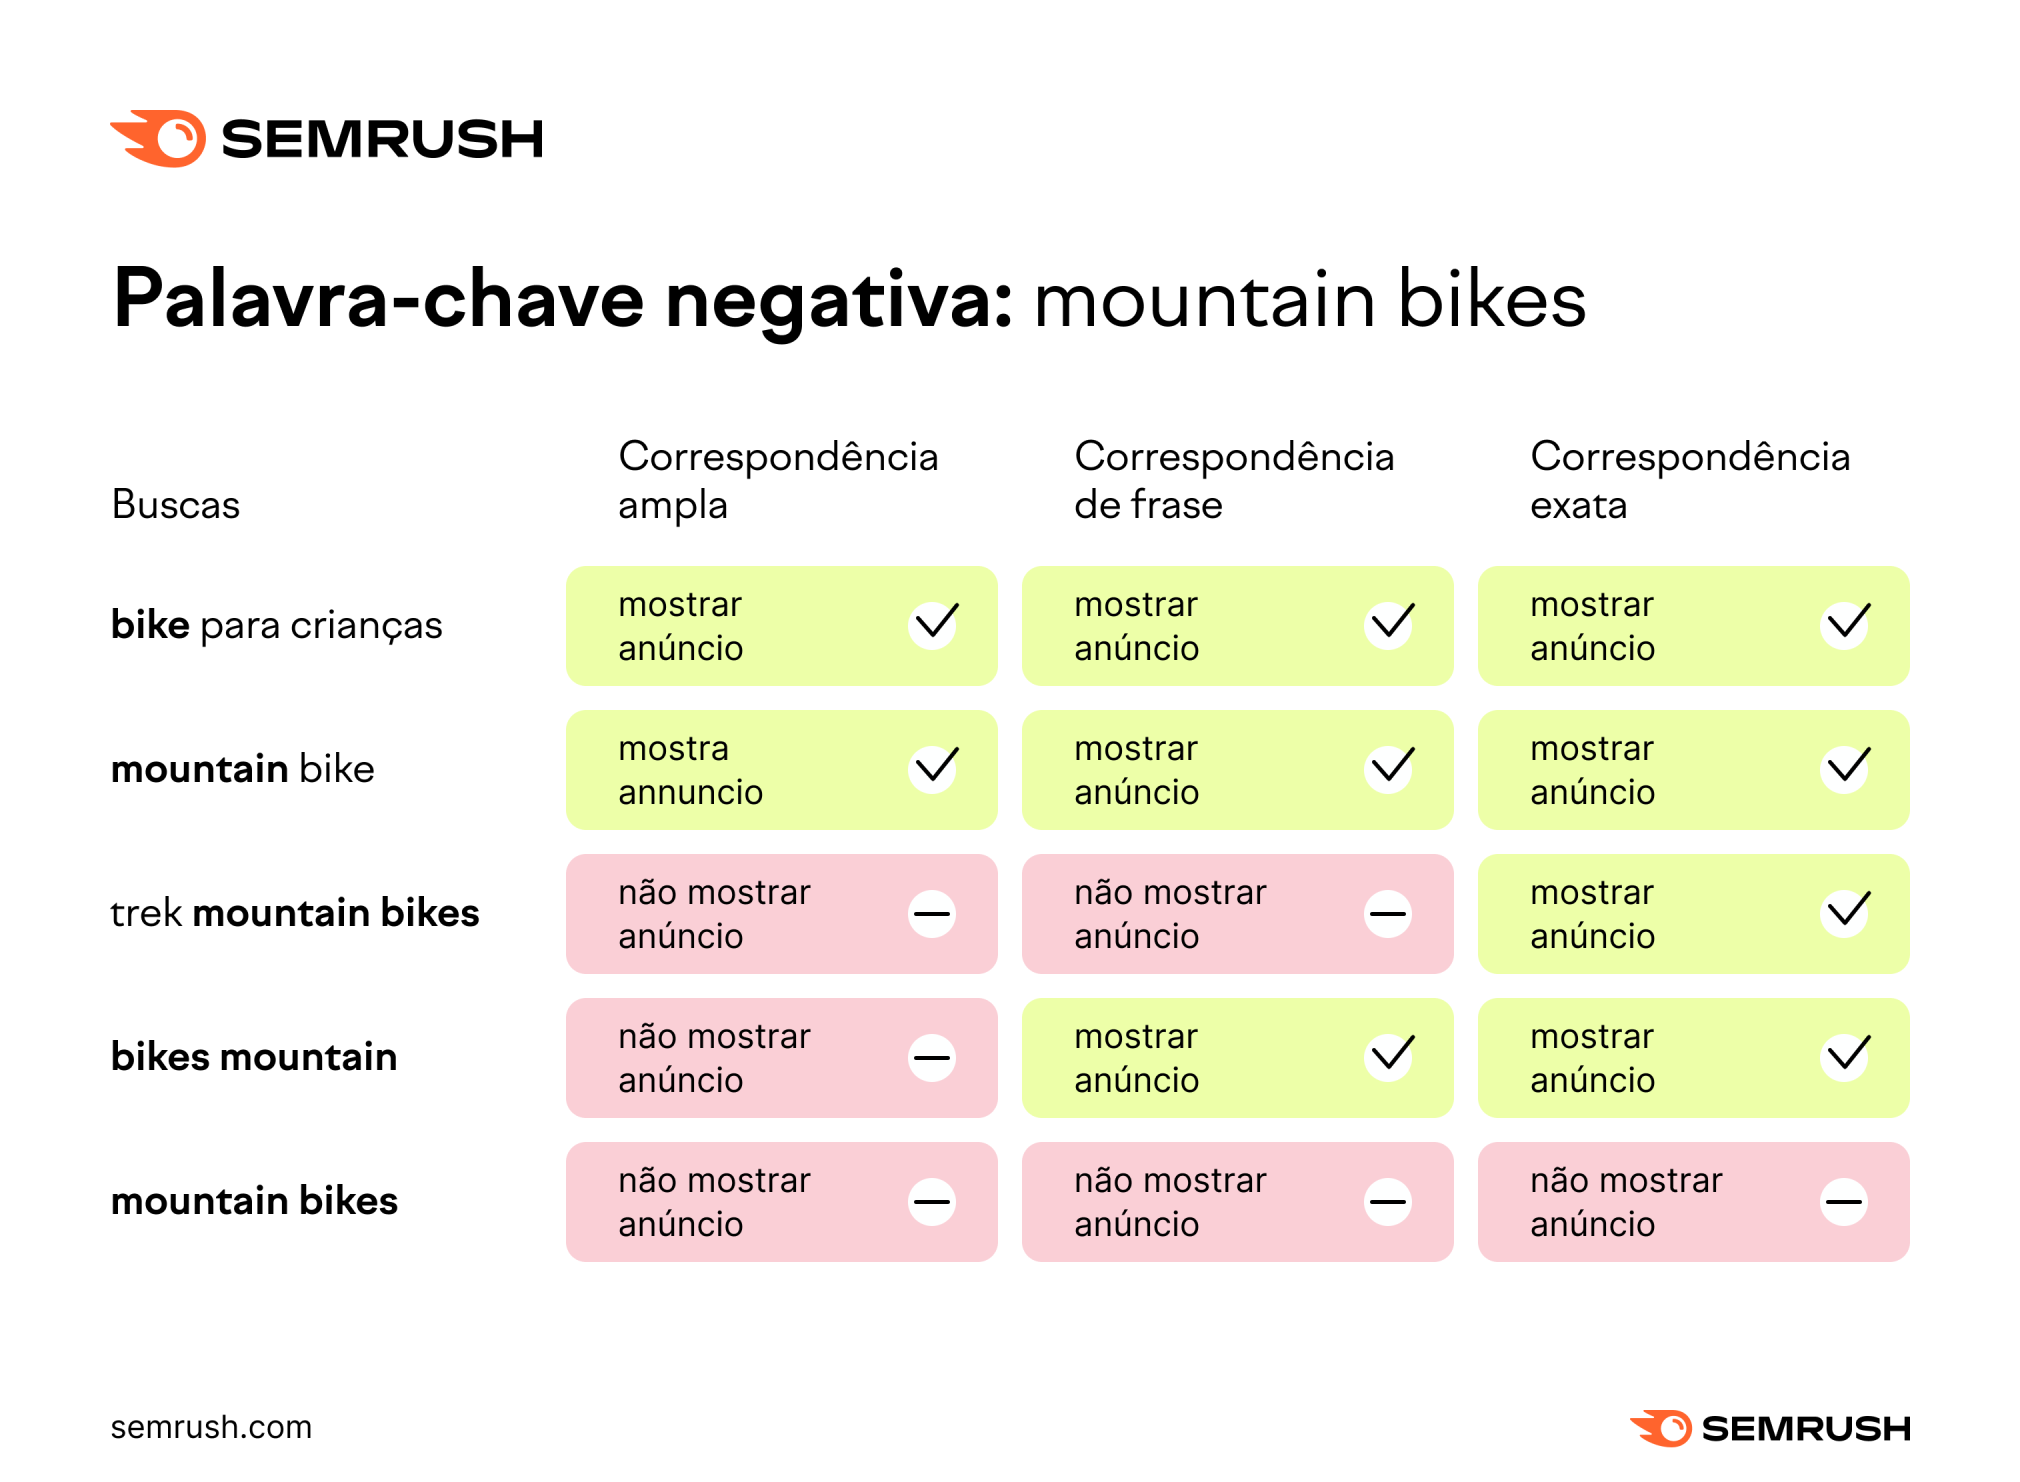 palavras-chave negativas para mountain bikes